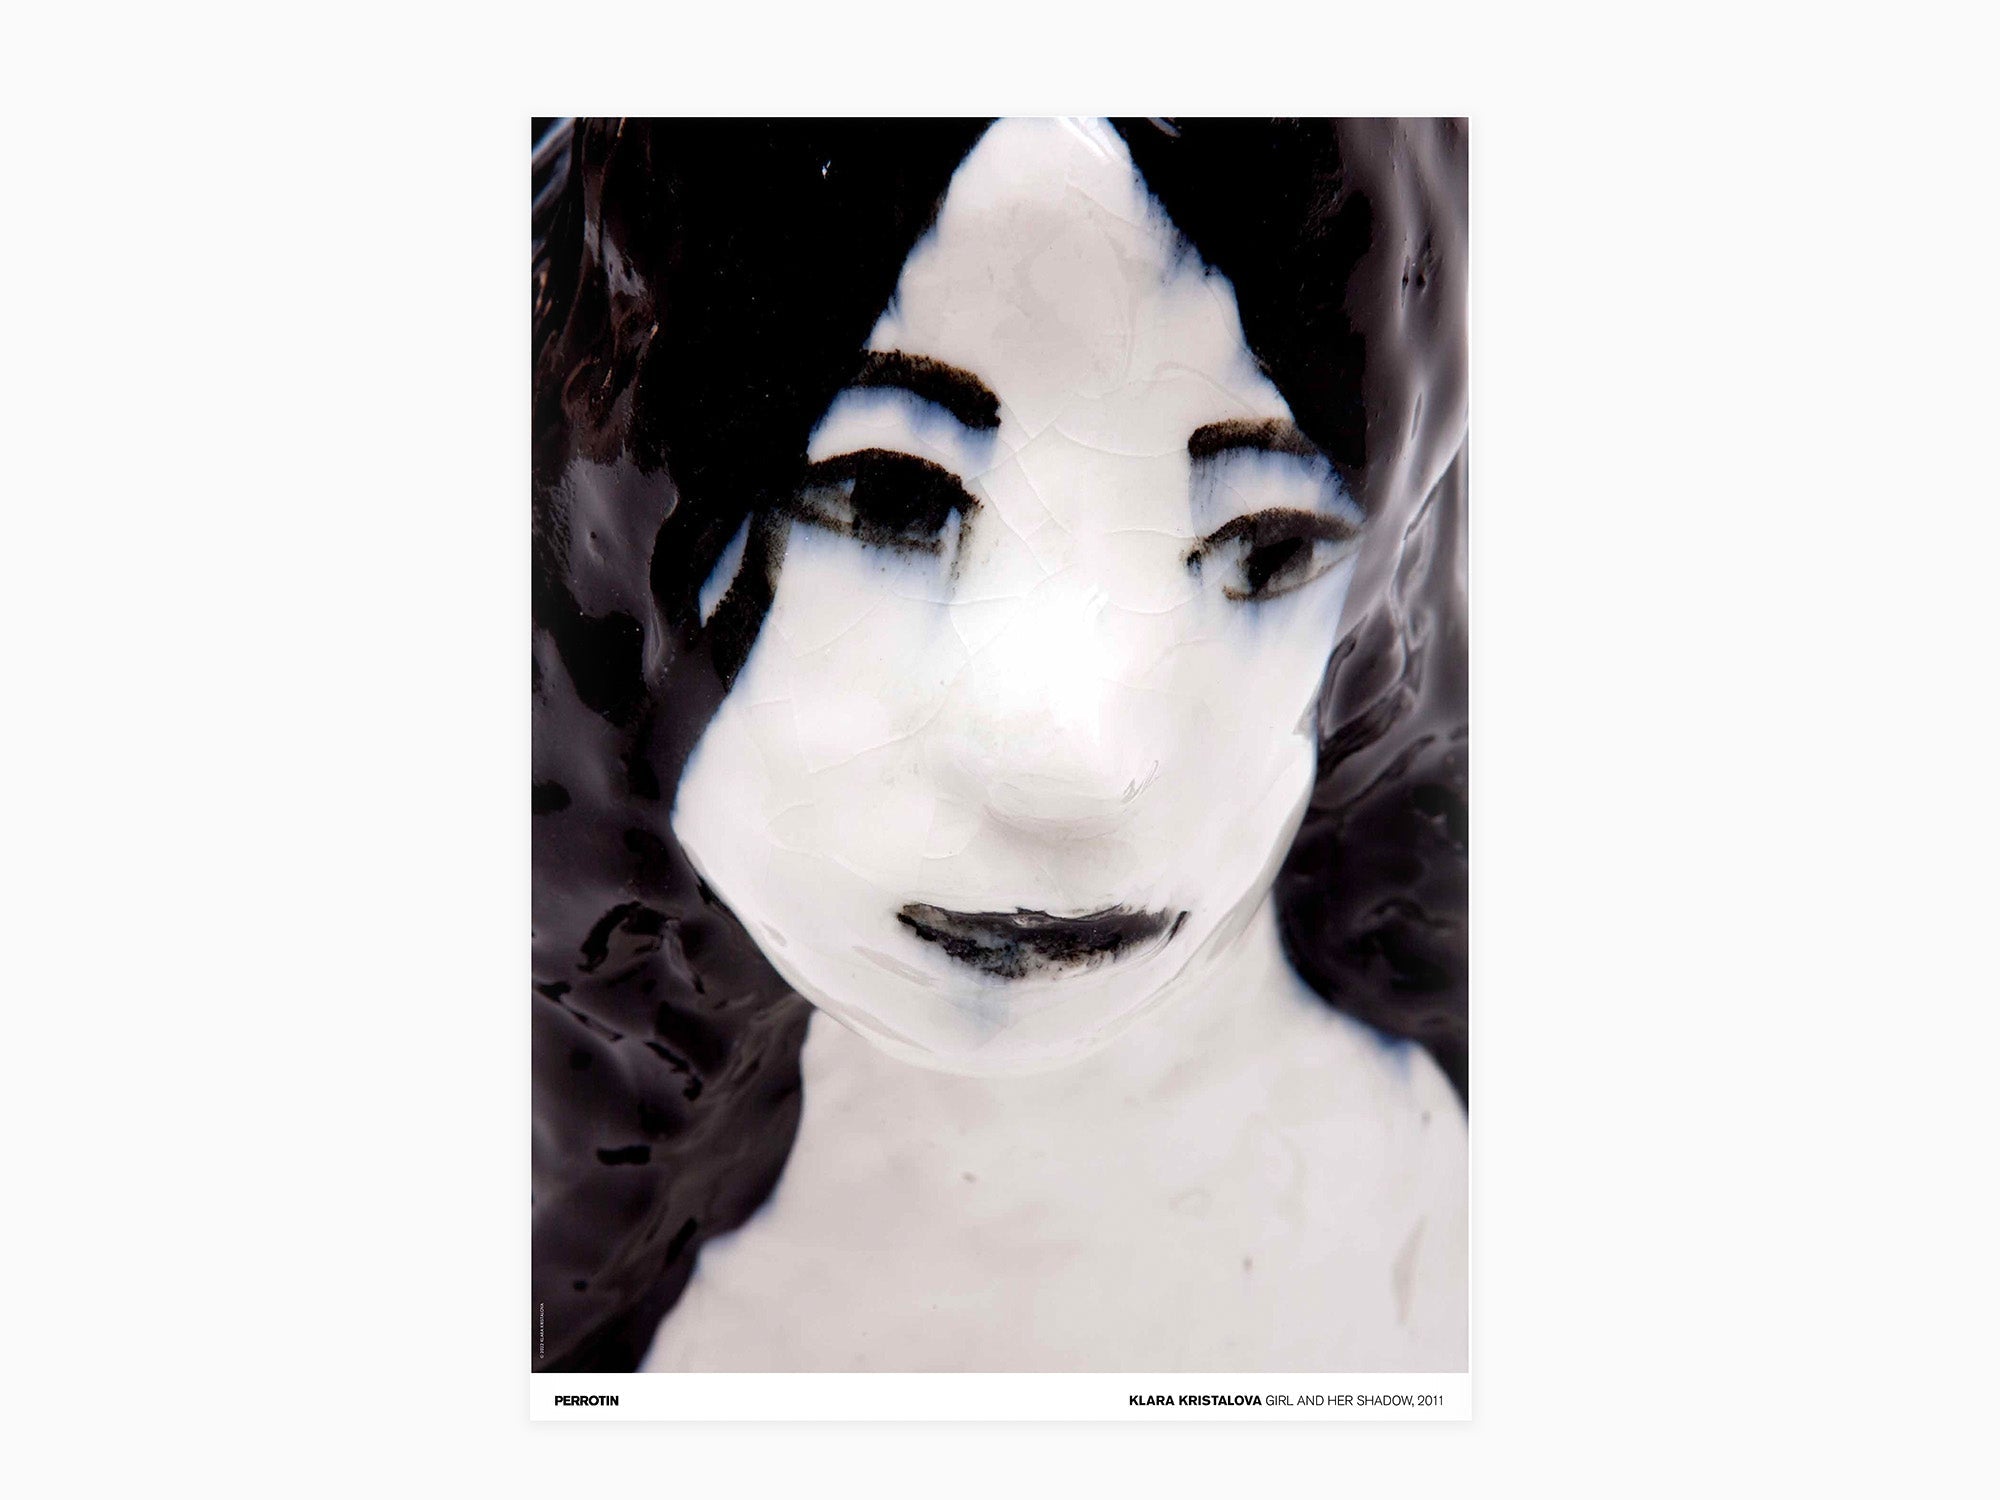 Klara Kristalova - Girl and Her Shadow, 2011 (signé poster)